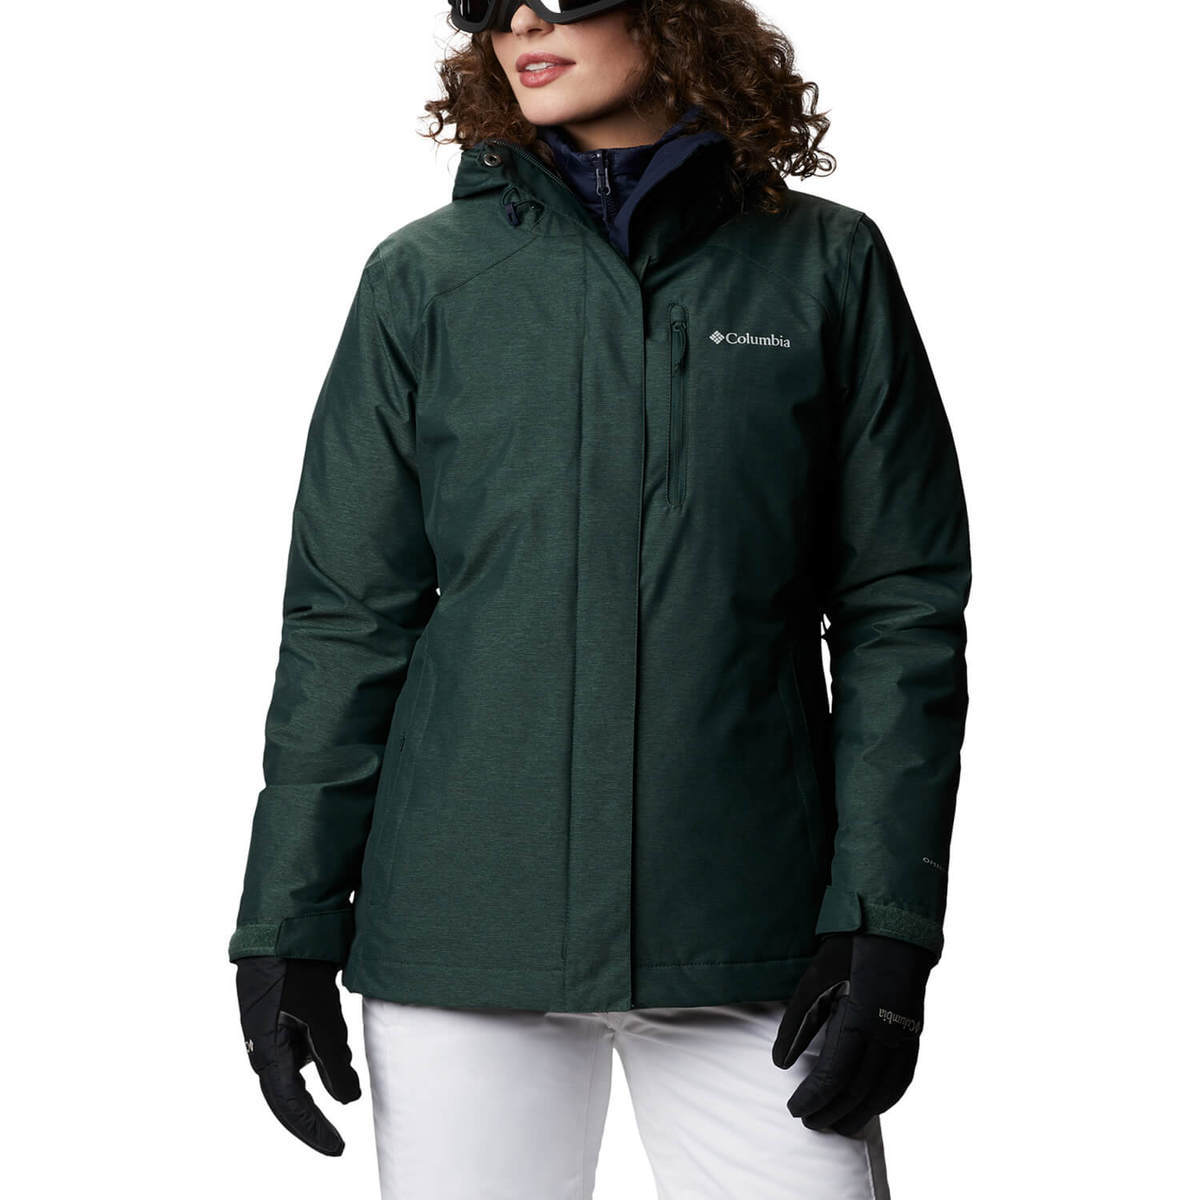 Columbia Women's Whirlibird IV Omni-Tech Waterproof Winter Jacket